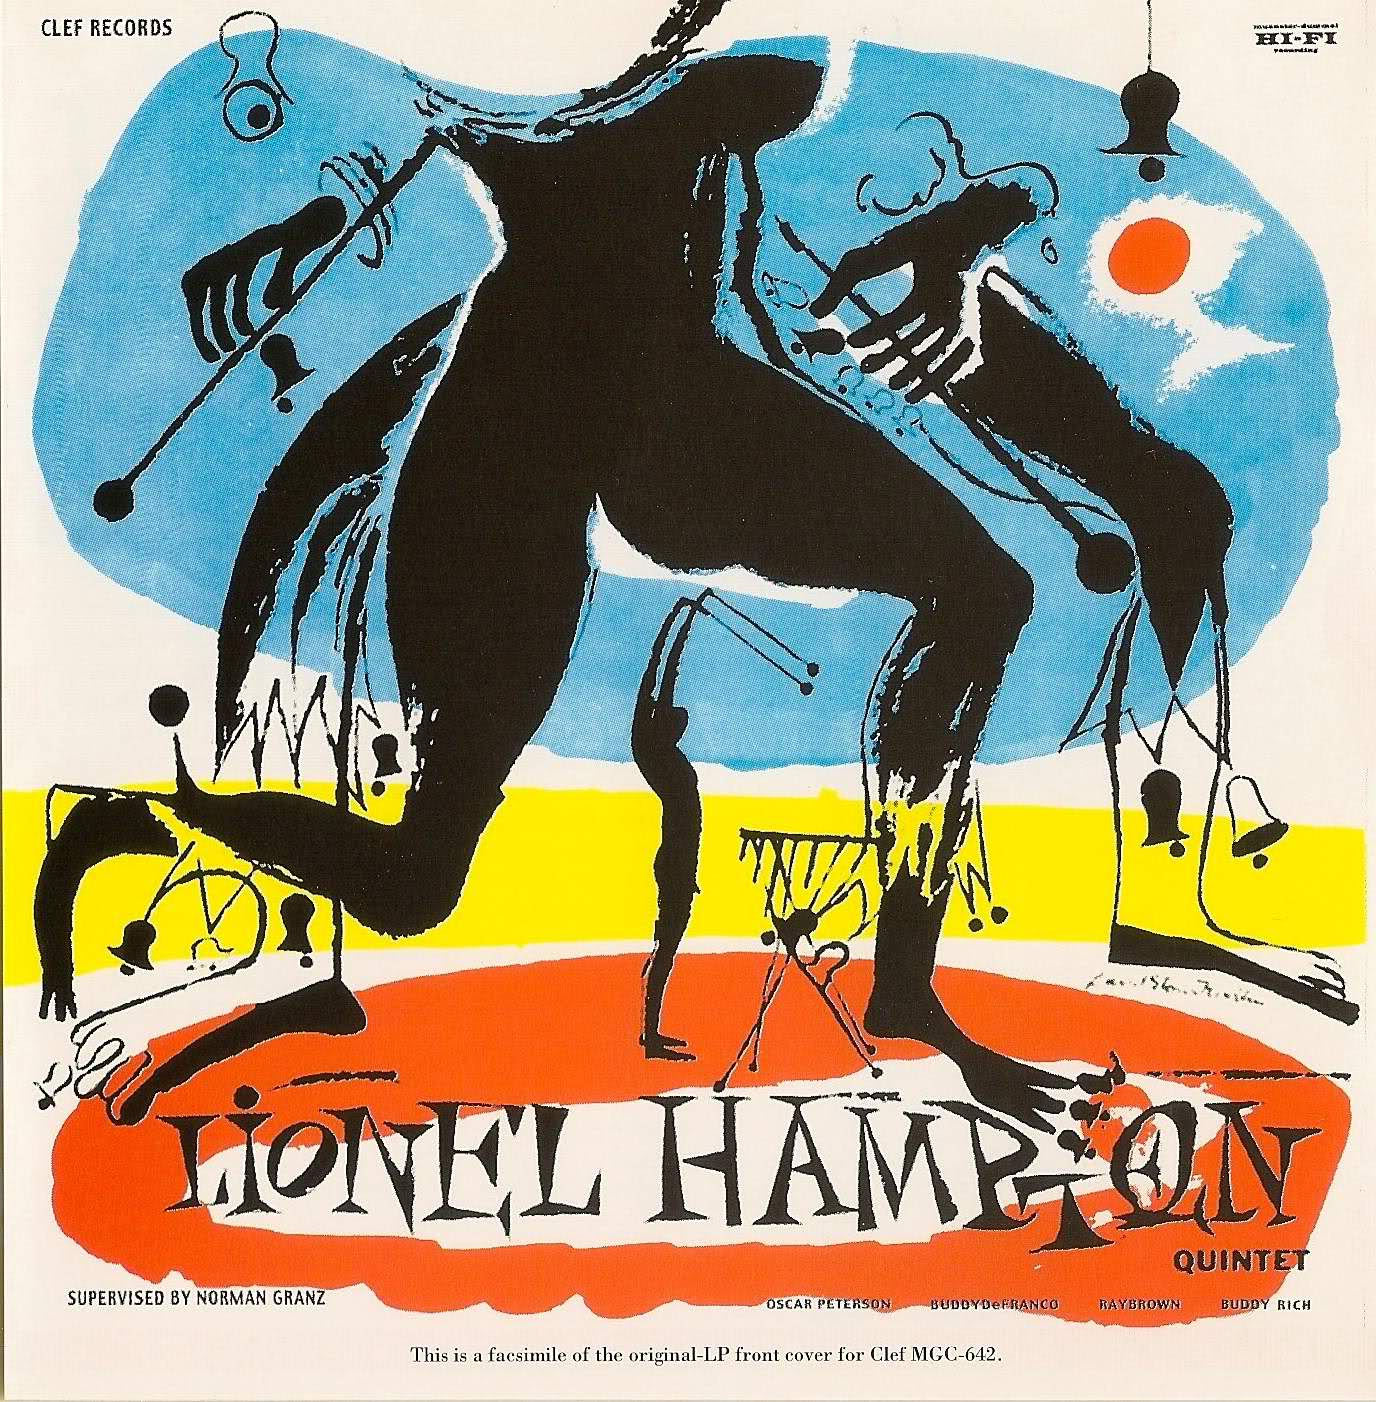 LIONEL HAMPTON - The Lionel Hampton Quintet (Clef  MGC-642) cover 